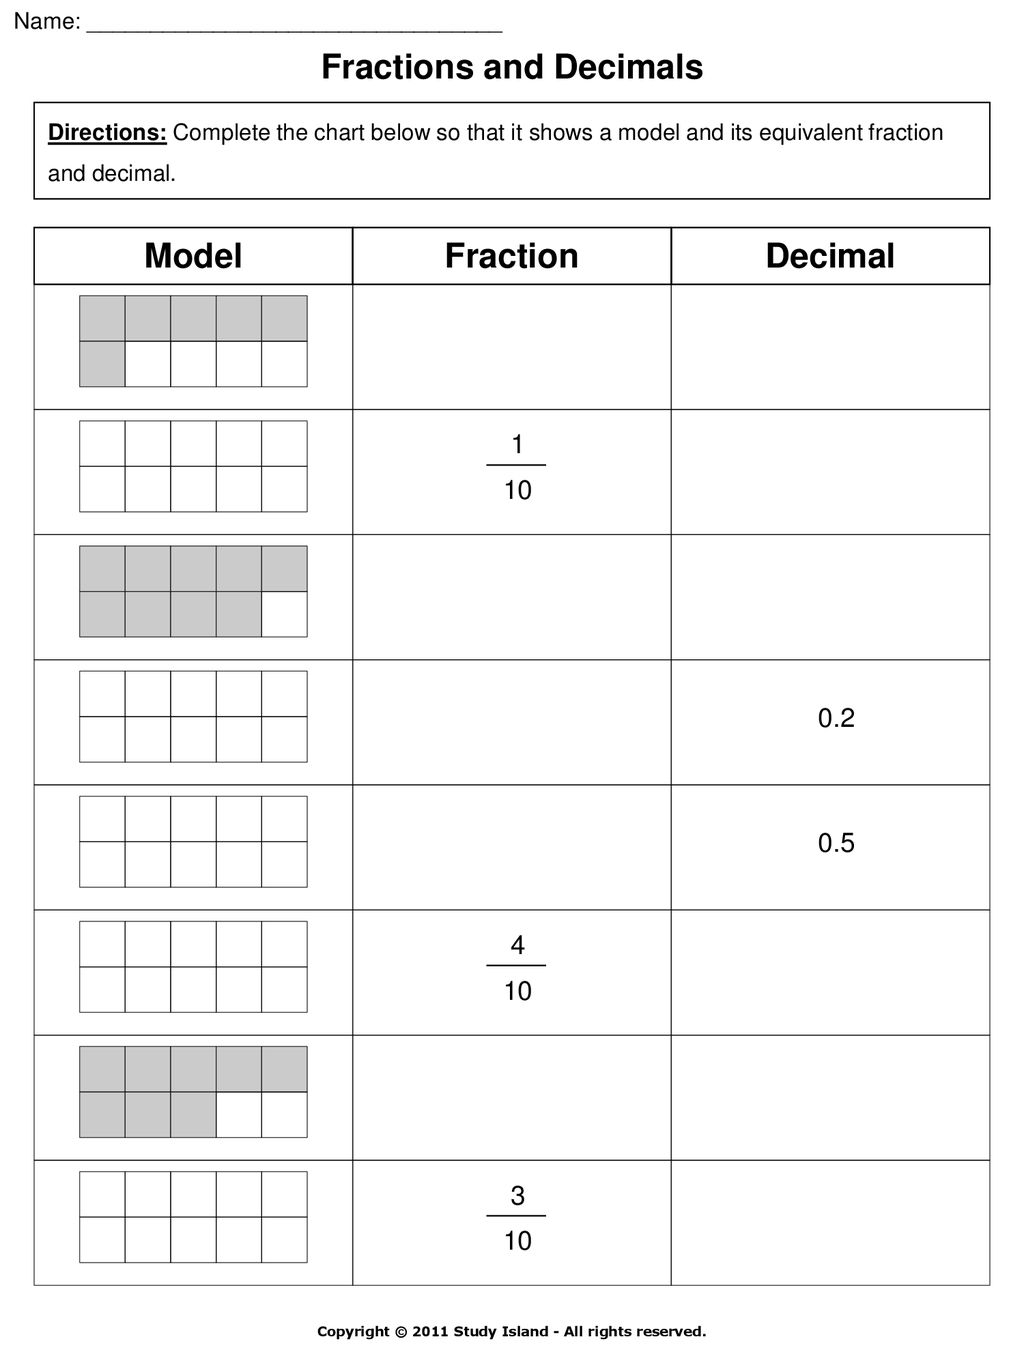 Fraction Decimal Equivalent Chart